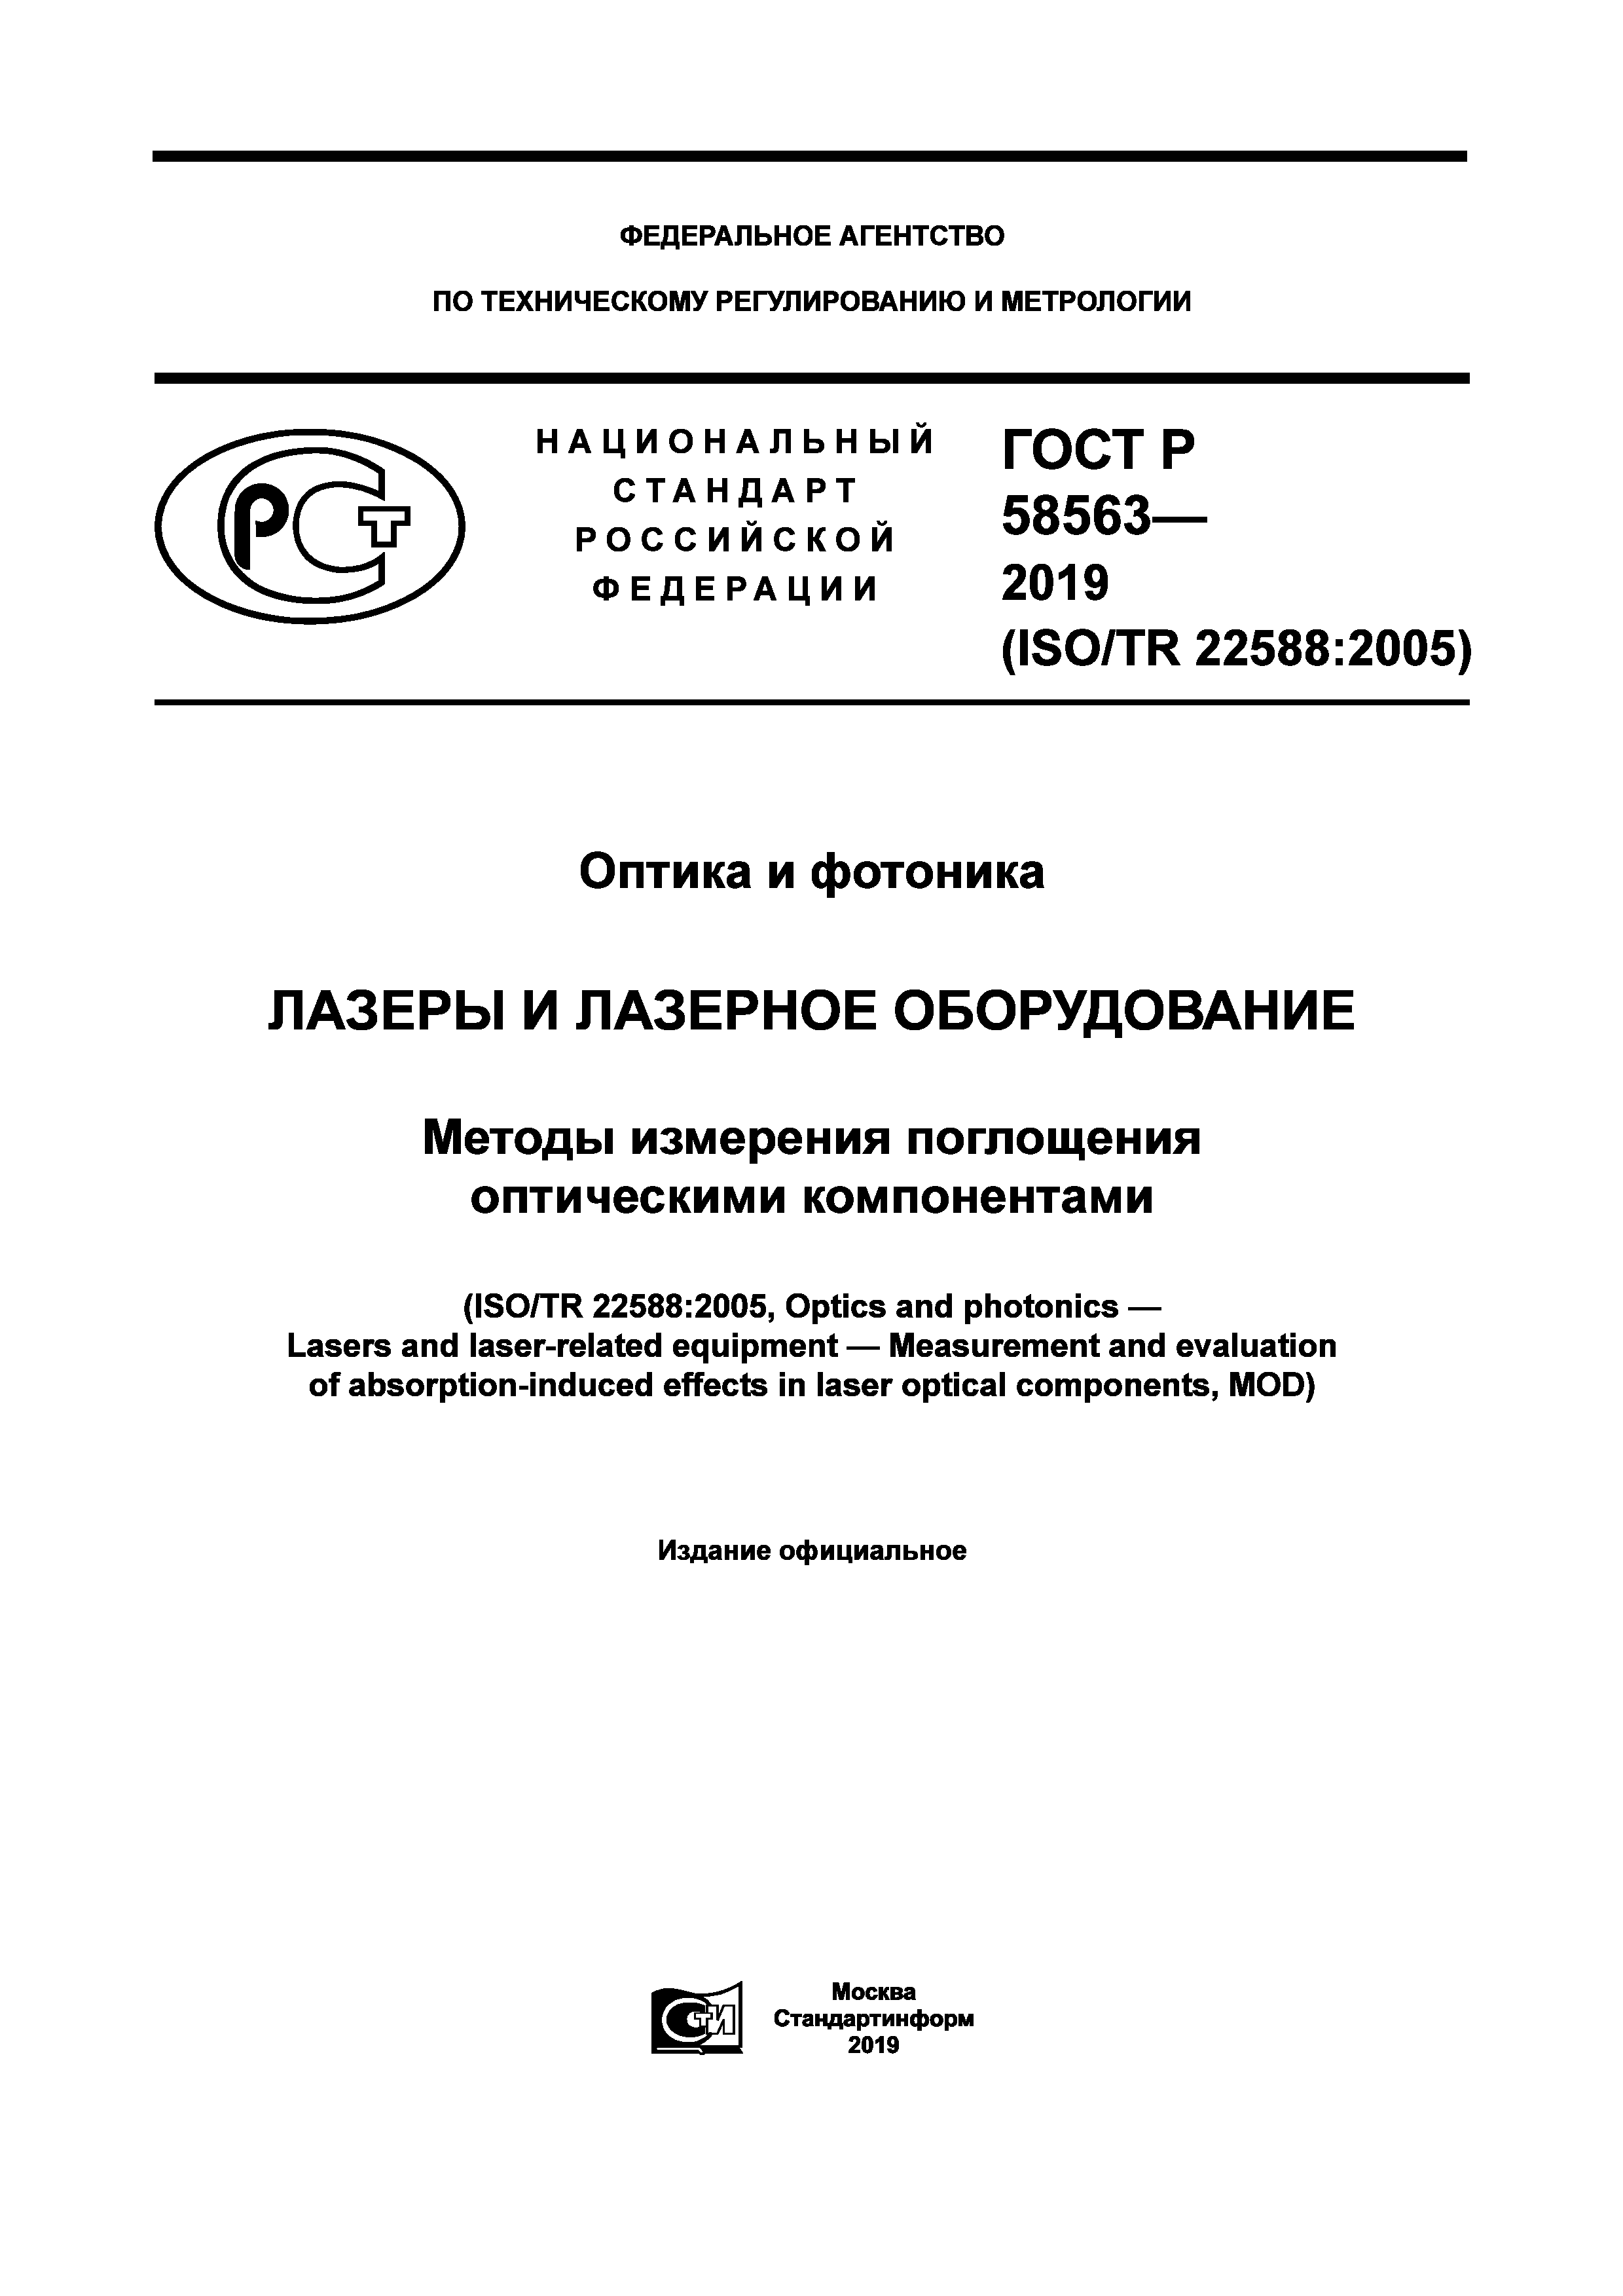 ГОСТ Р 58563-2019